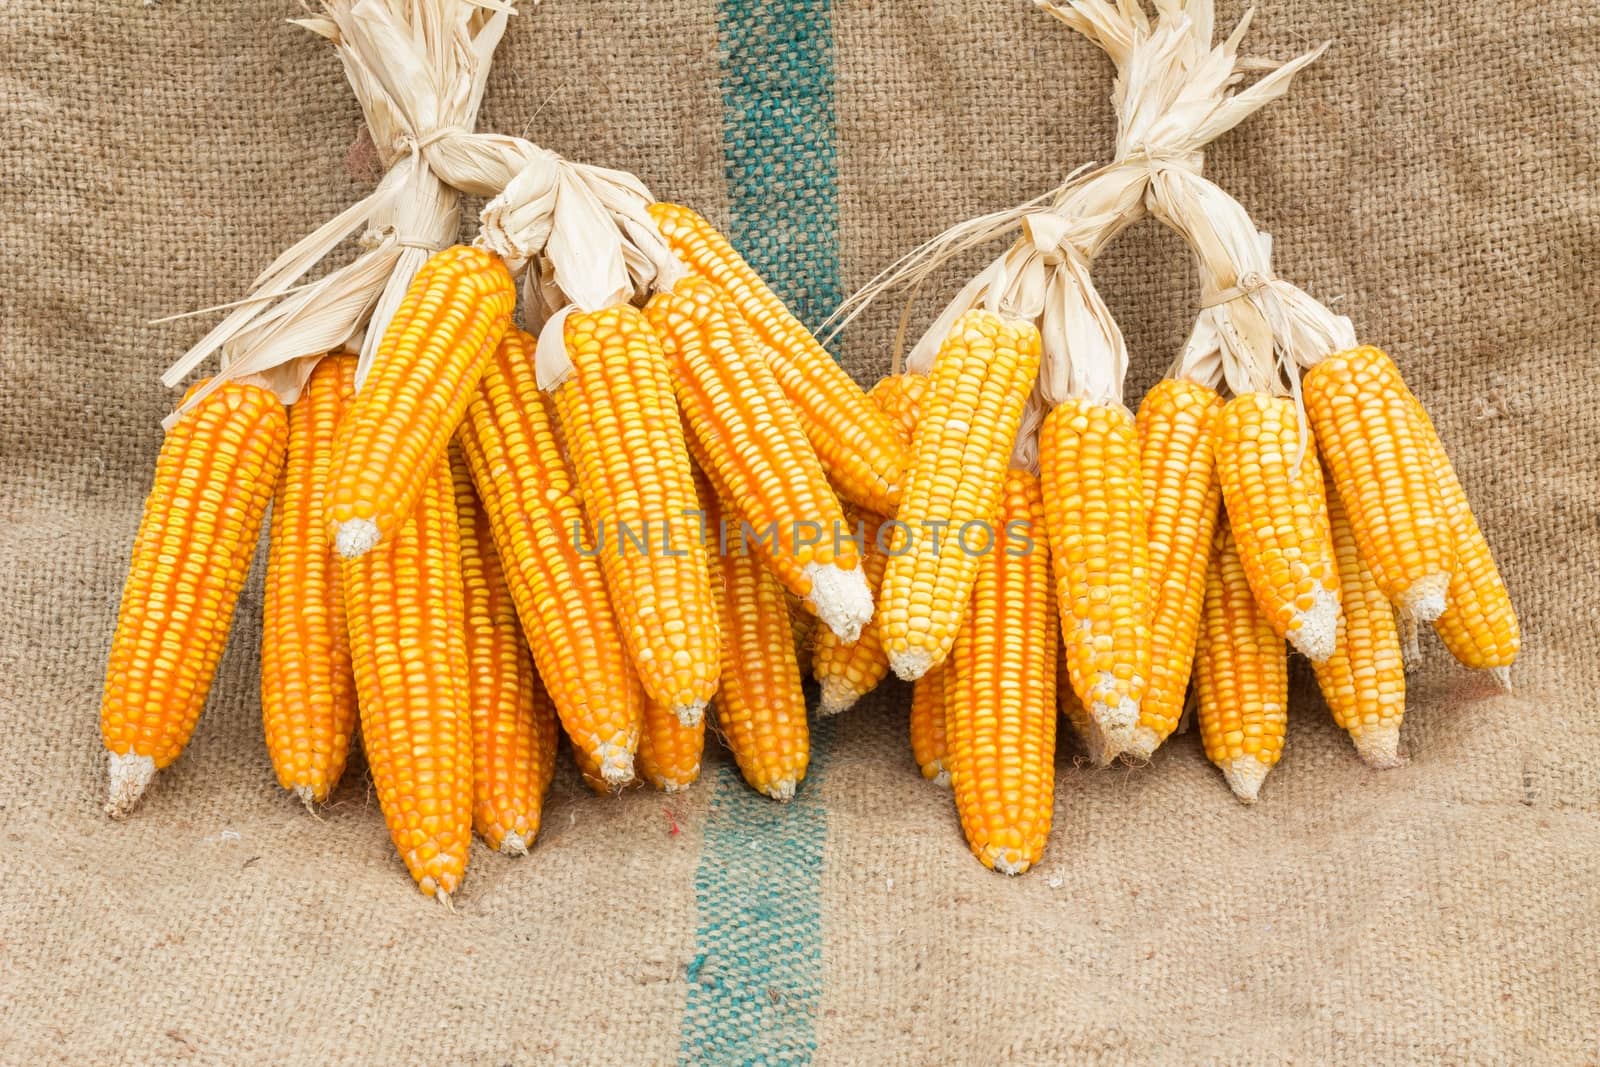 Ears of ripe corn on the gunnysack